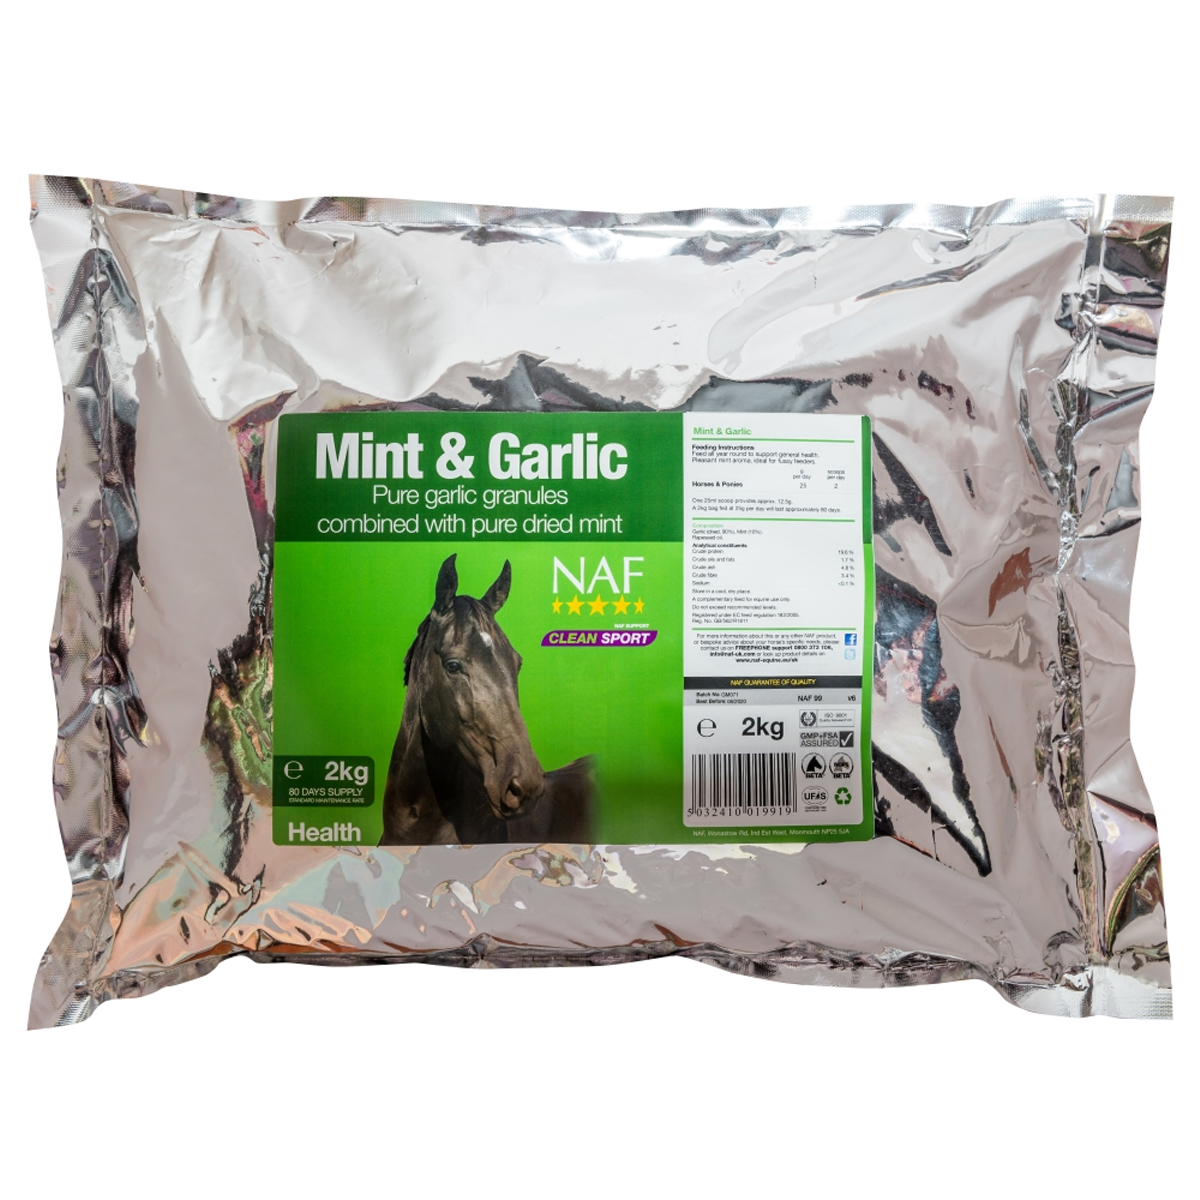 NAF Mint & Garlic 2kg